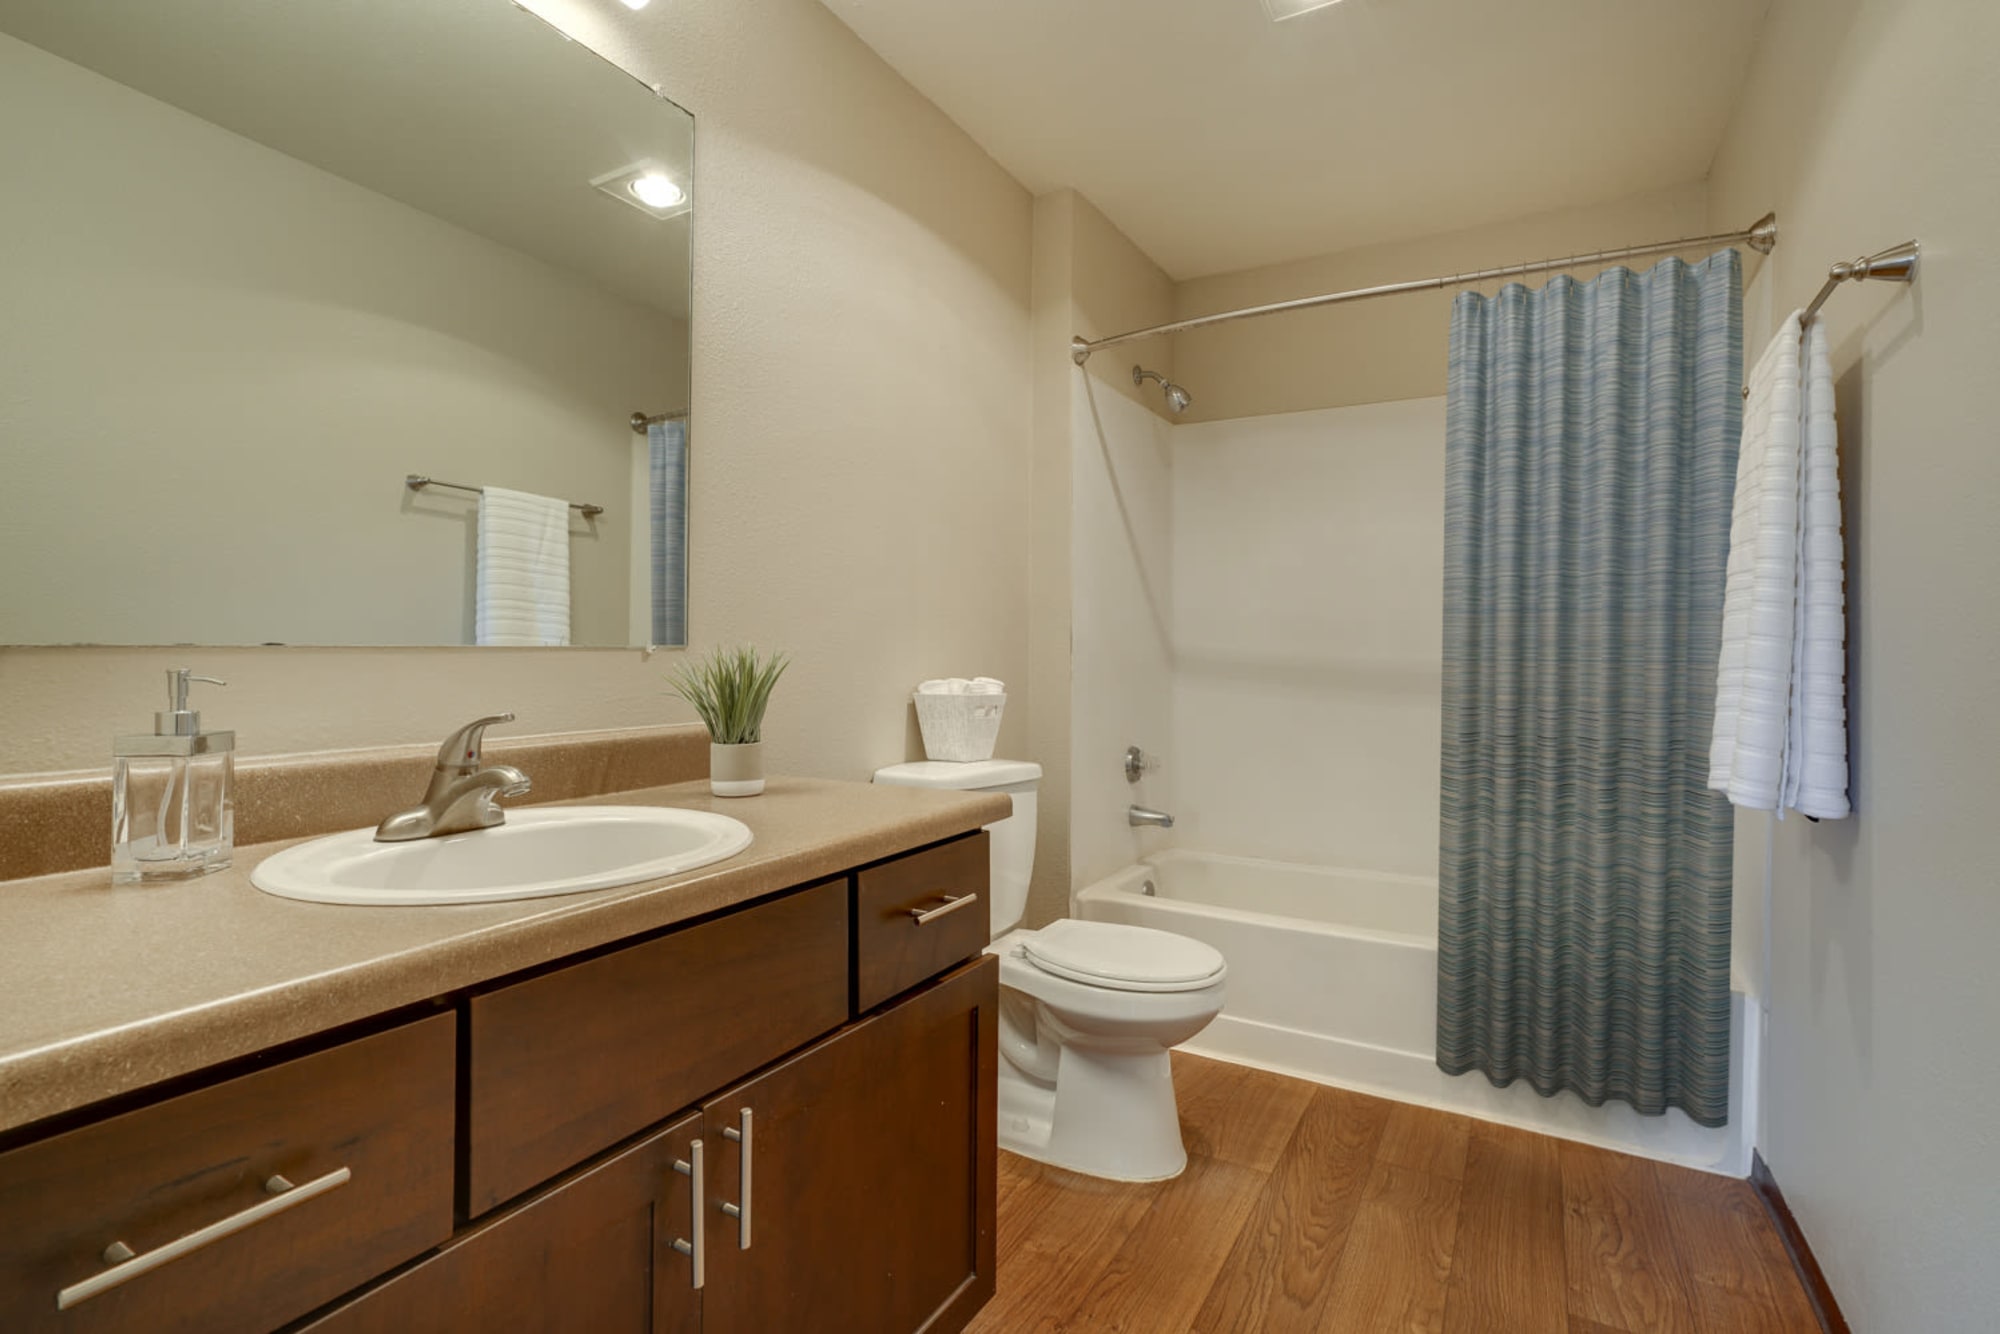 Bathroom with a tub at Renaissance at 29th Apartments in Vancouver, Washington